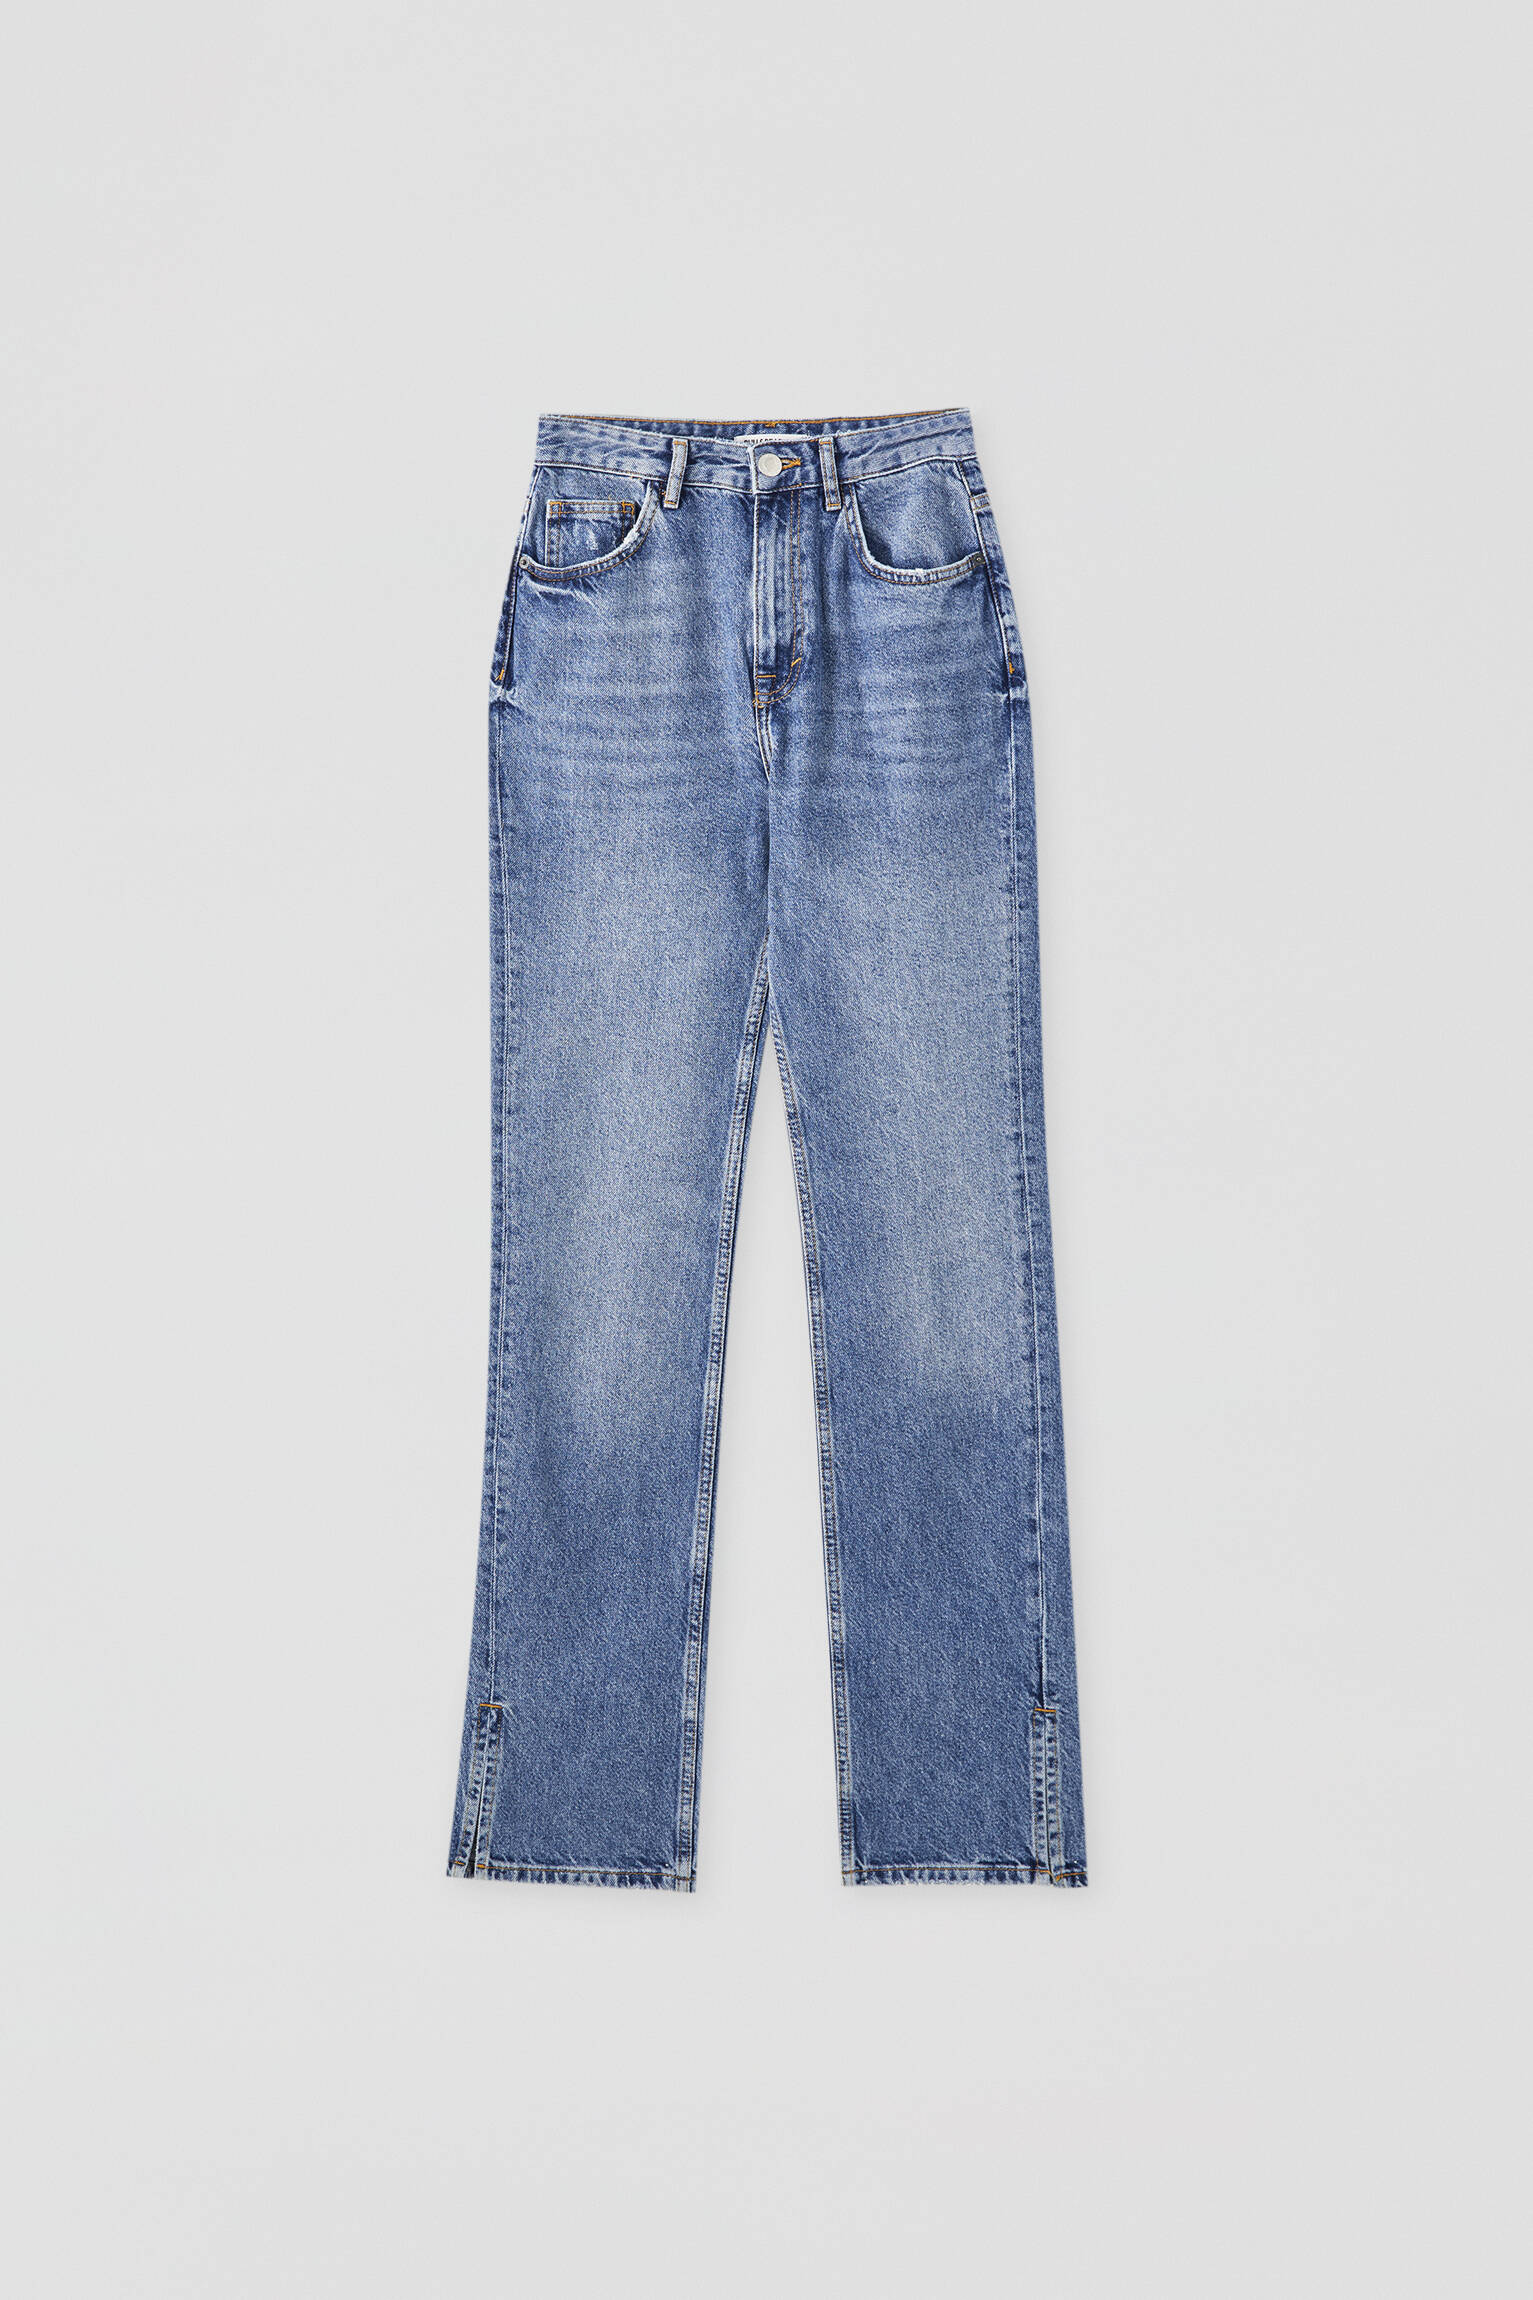 Modalite.net - Pull & Bear - High waist jeans with seam detail